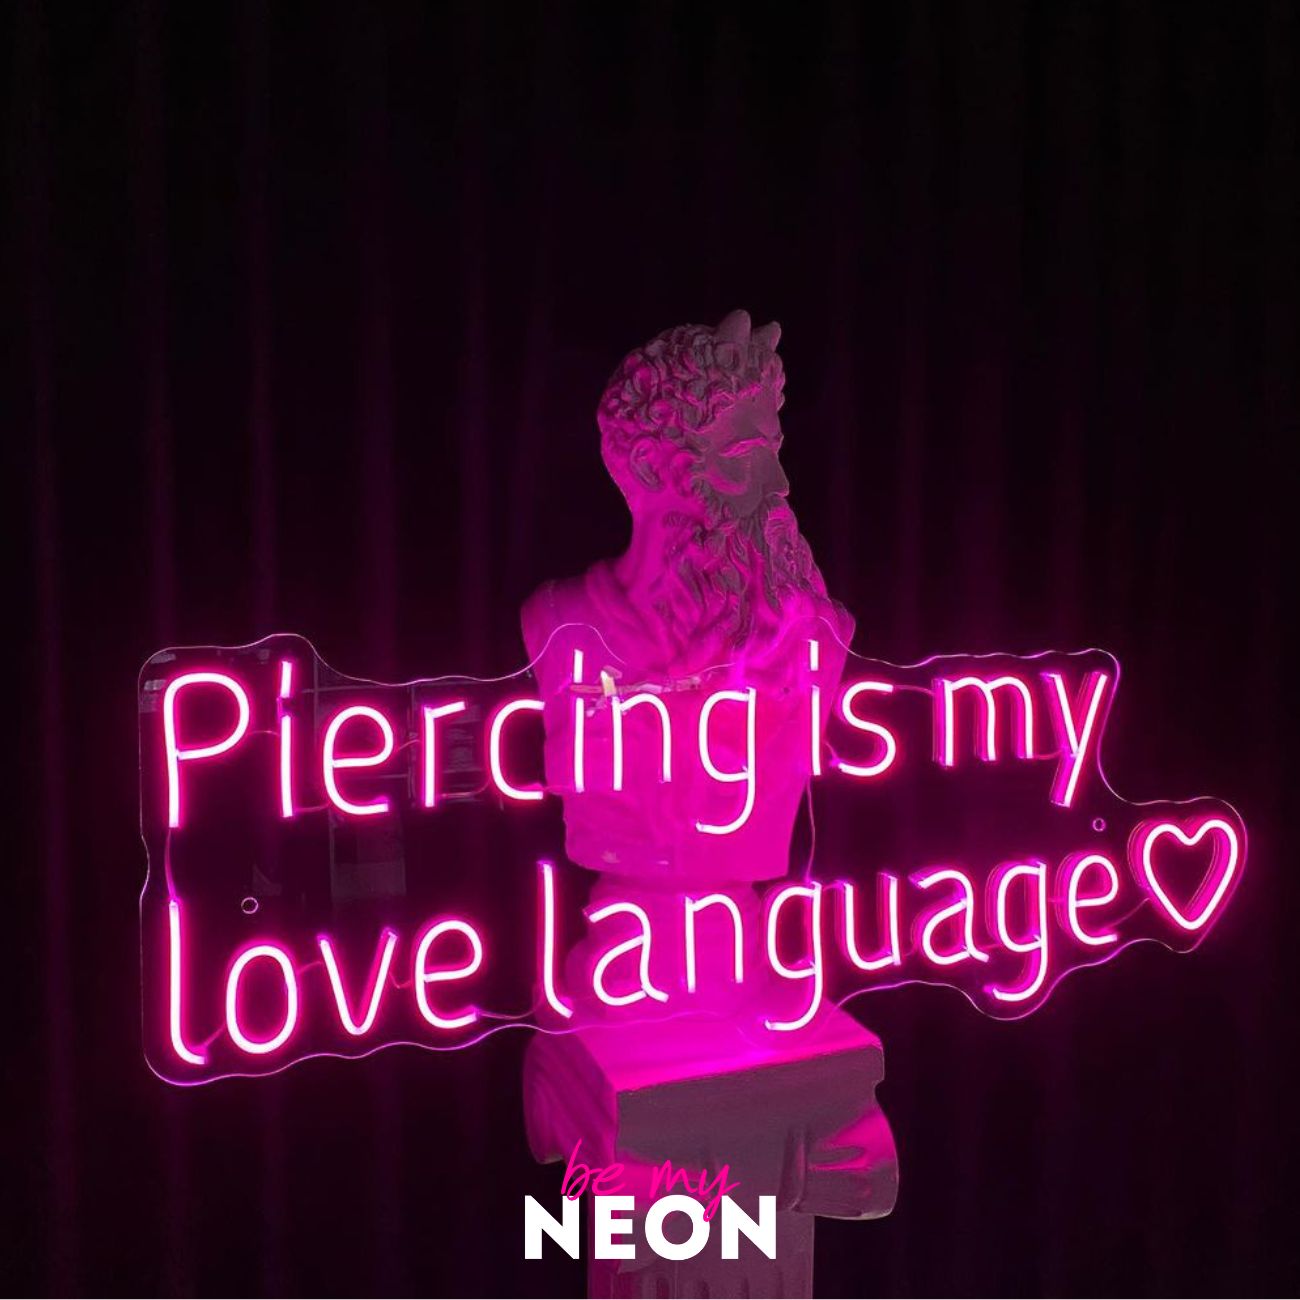 "Piercing is my love language" LED Neonschild